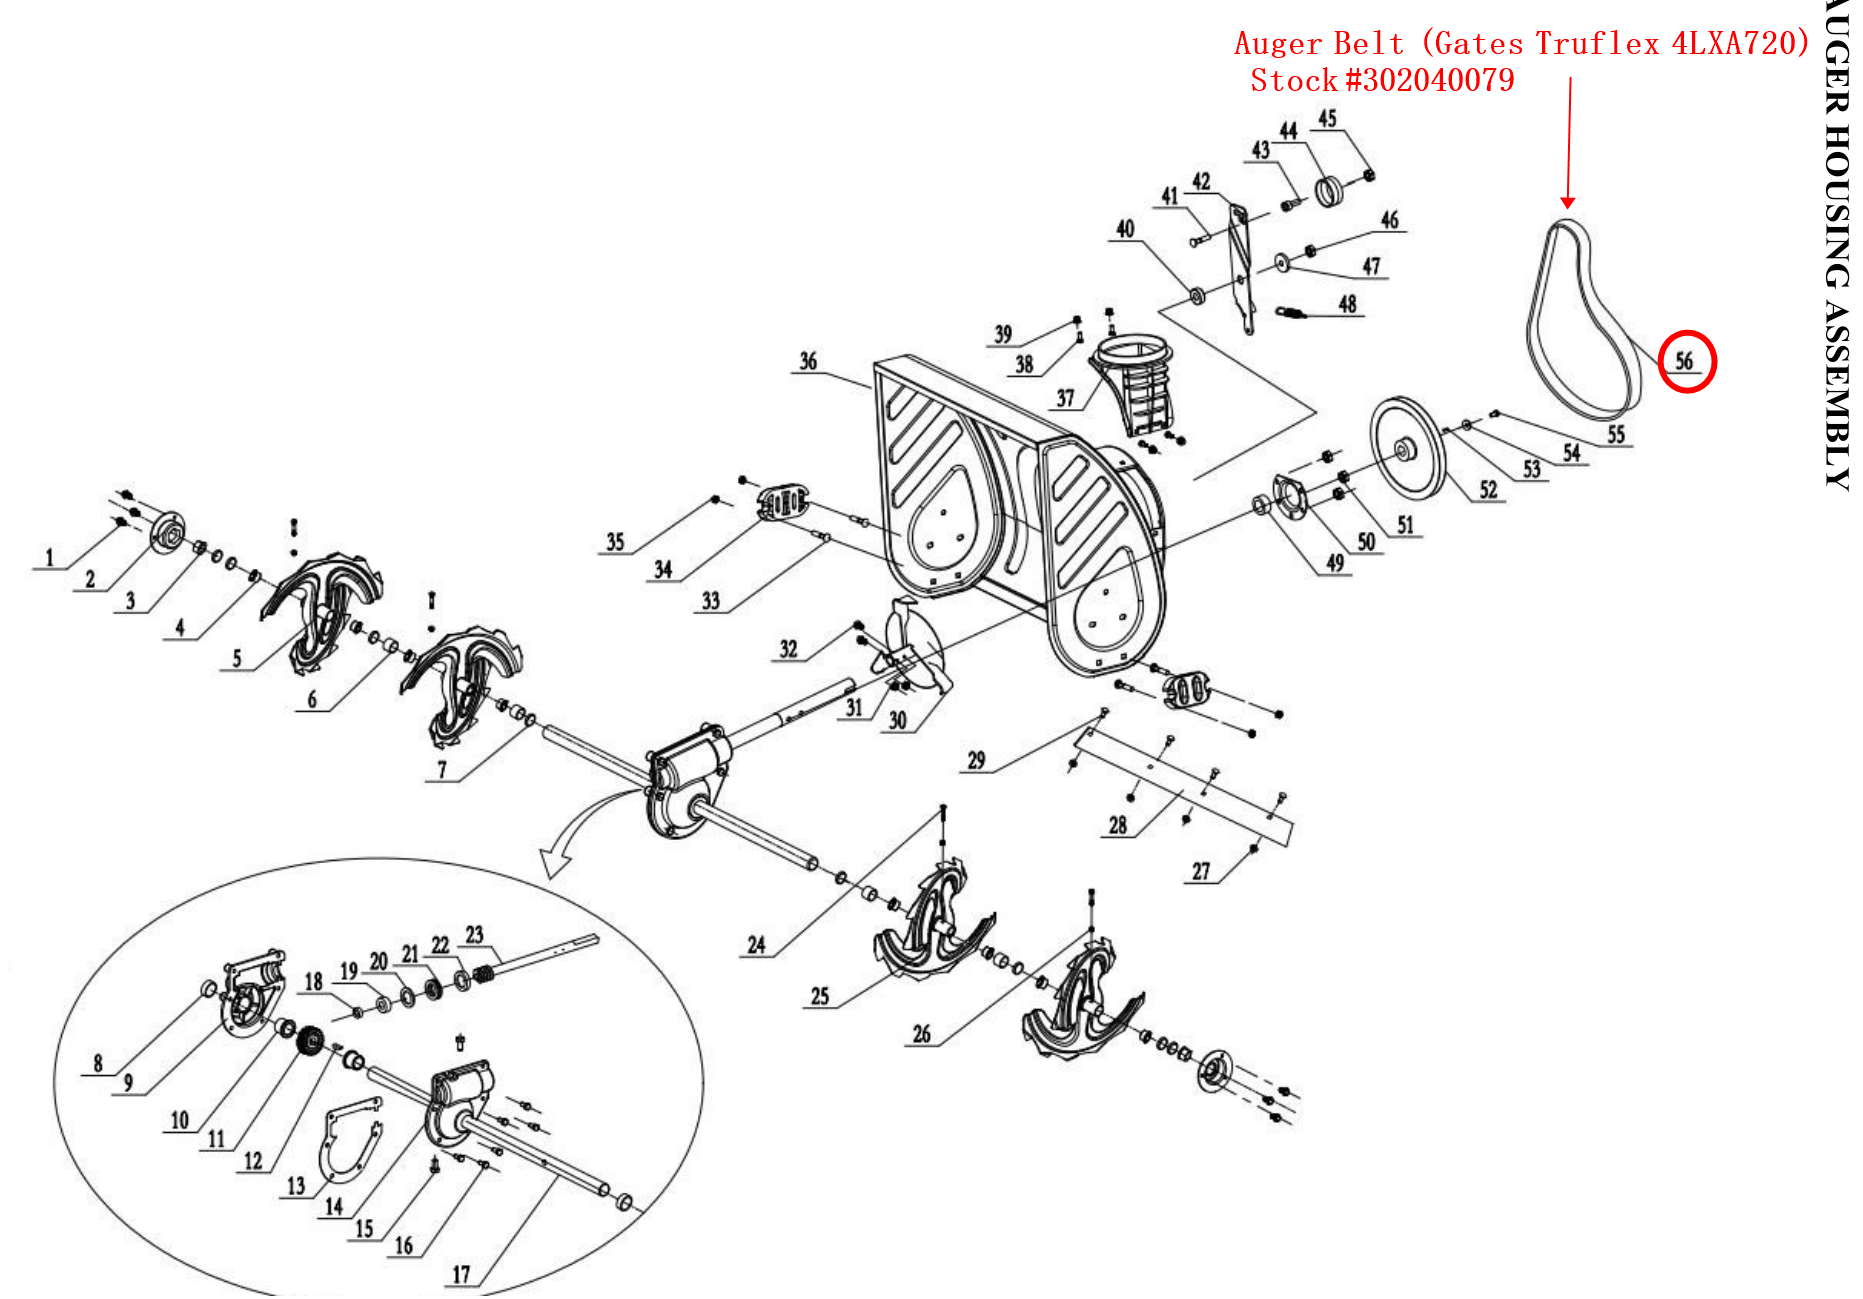 Snow Blower Parts - Auger Belt (Gates Truflex 4LXA720), Stock #302040079